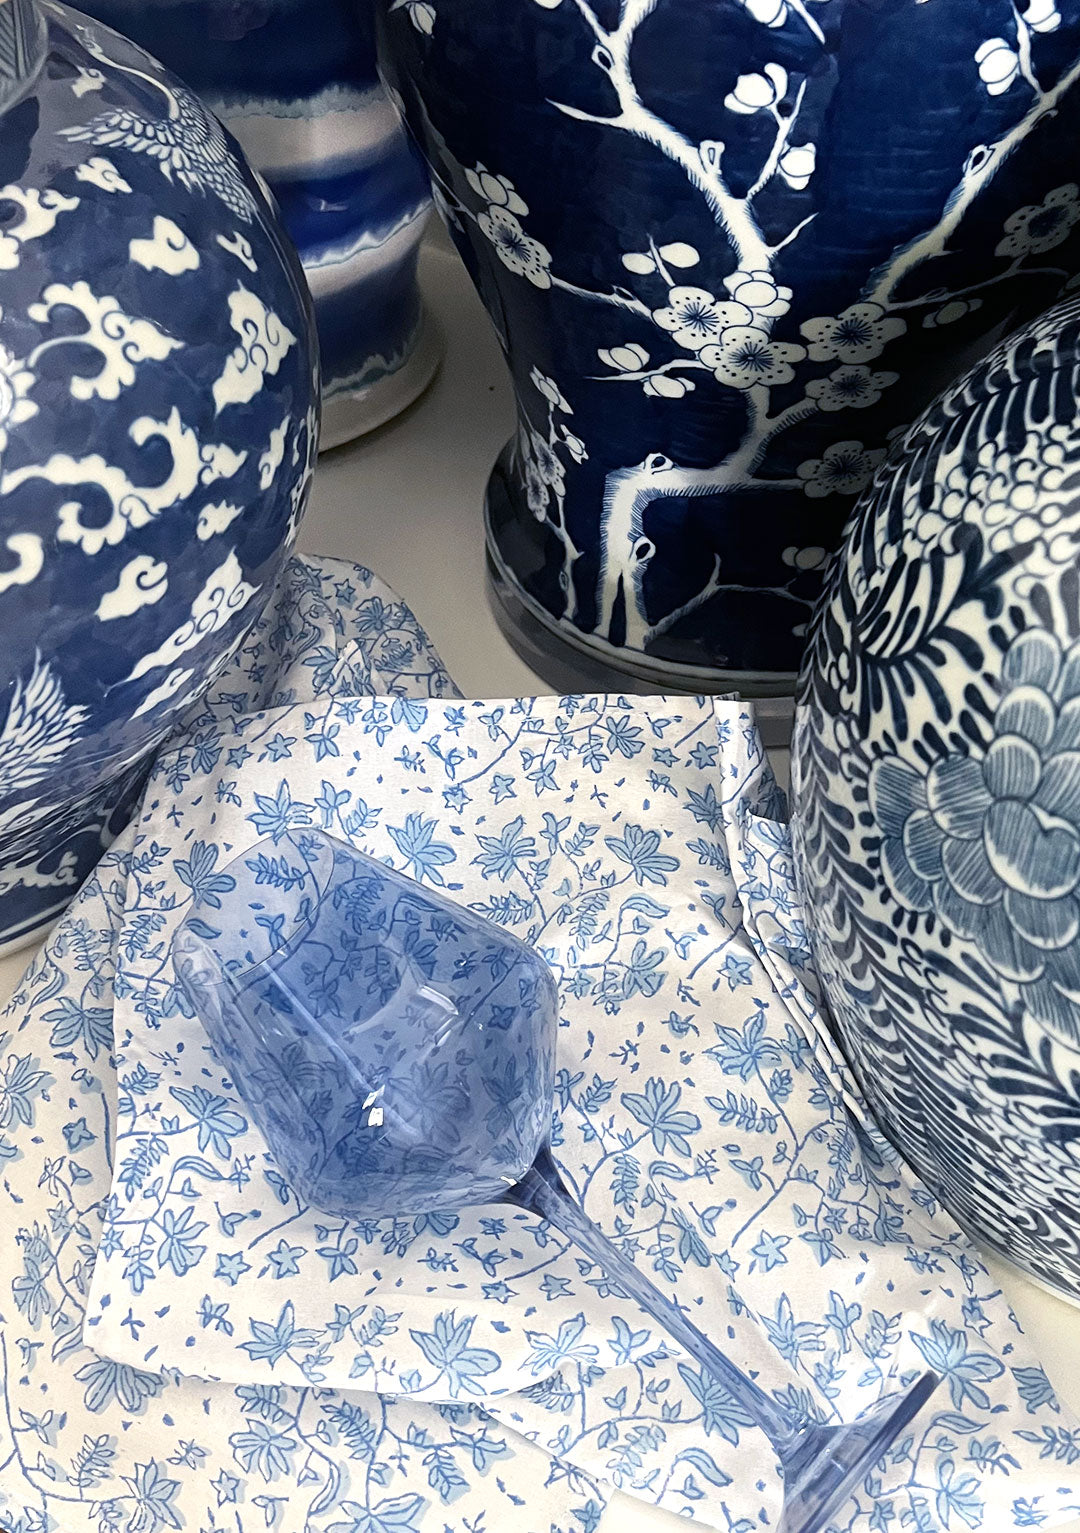 Whimsy Floral Napkins in Sorrento Blue - Set of 4